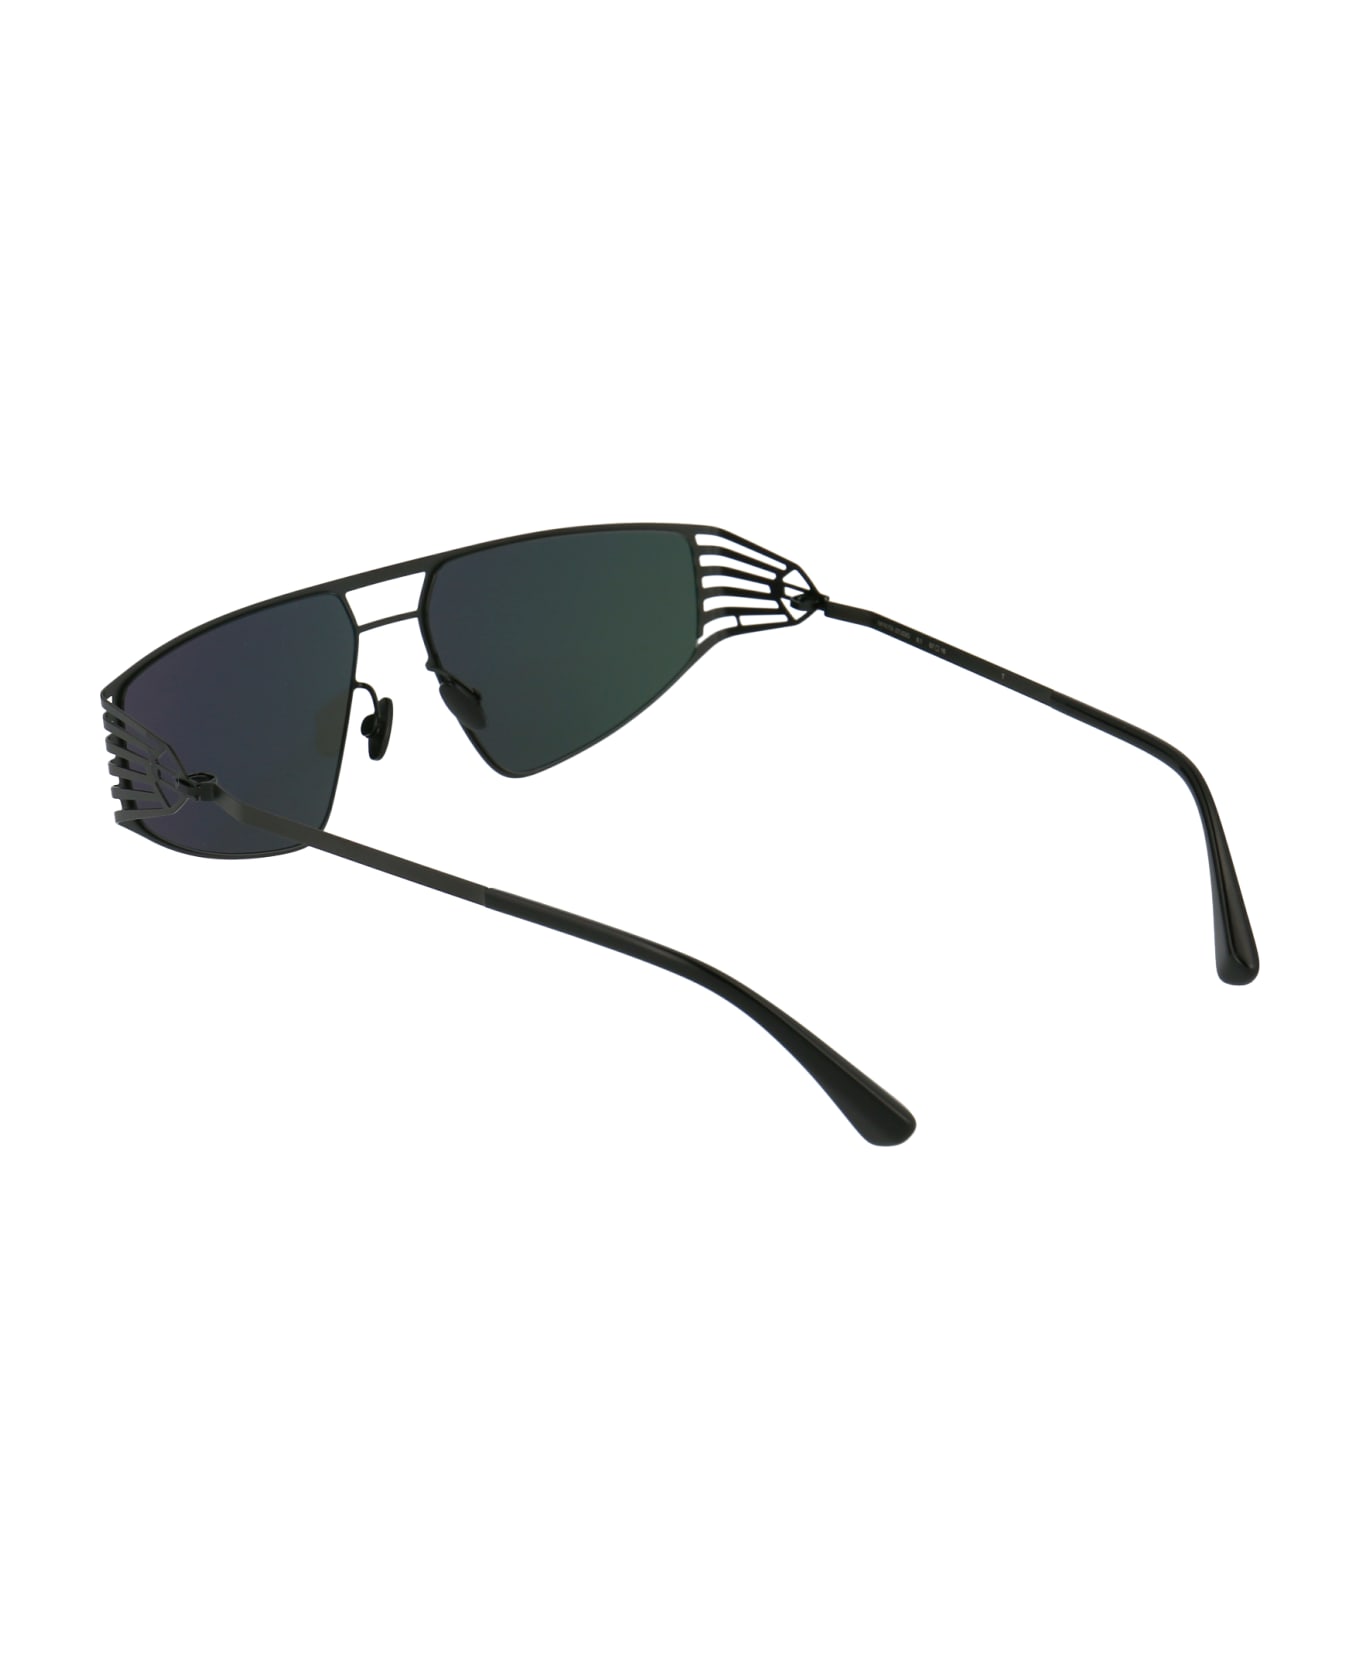 Mykita Studio8.1 Sunglasses - 002 BLACK DARKGREY SOLID